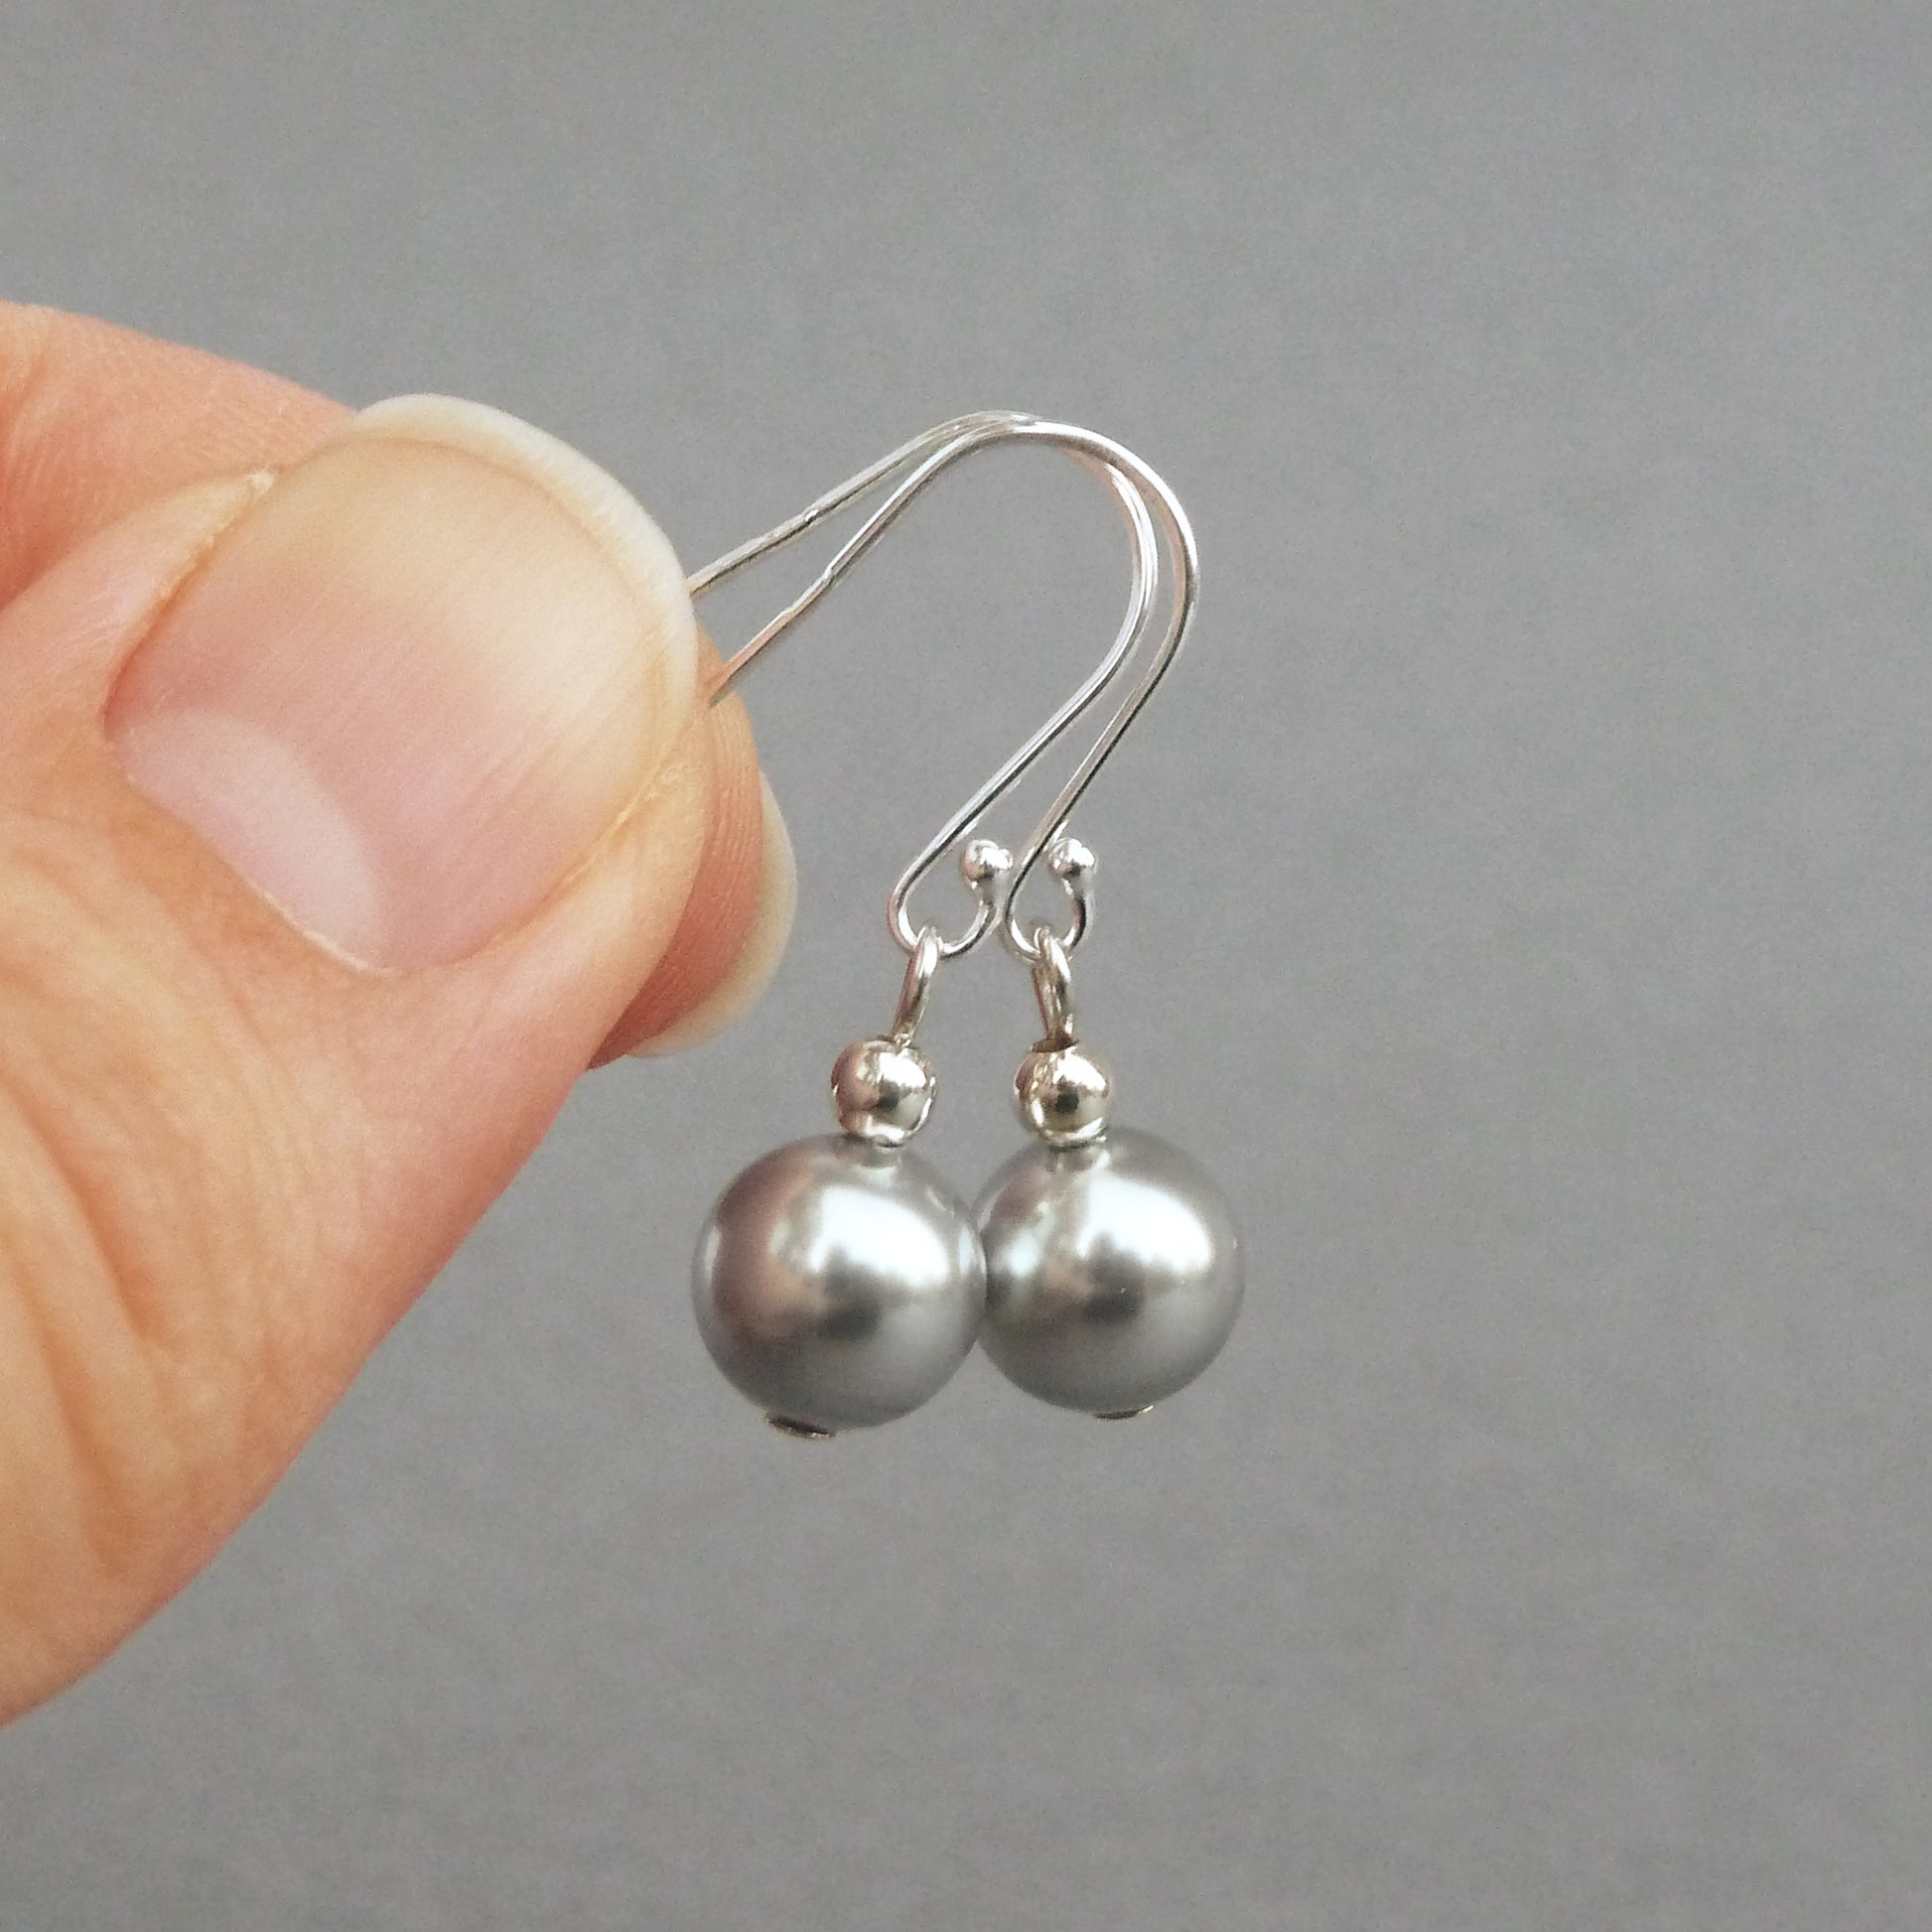 Simple silver grey drop earrings